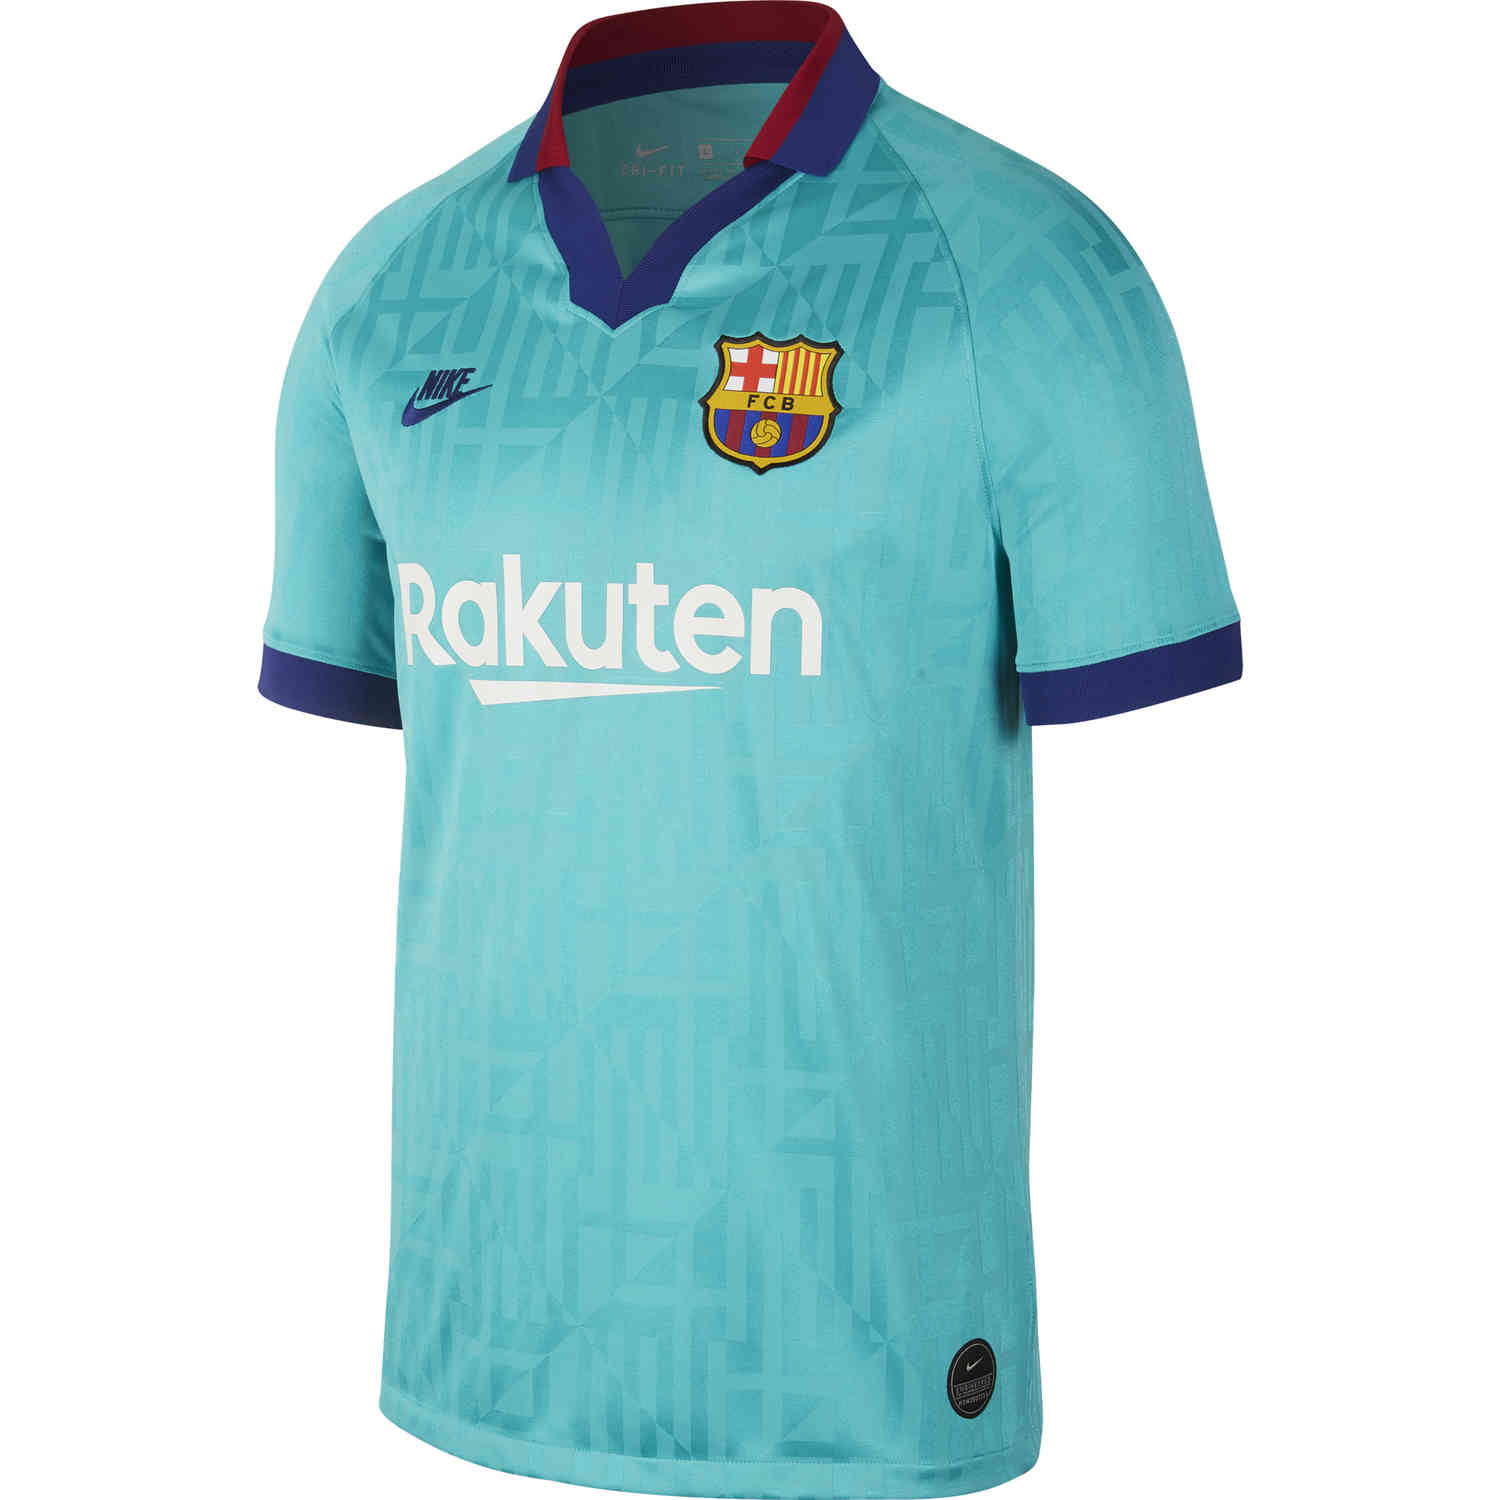 buy fc barcelona jersey